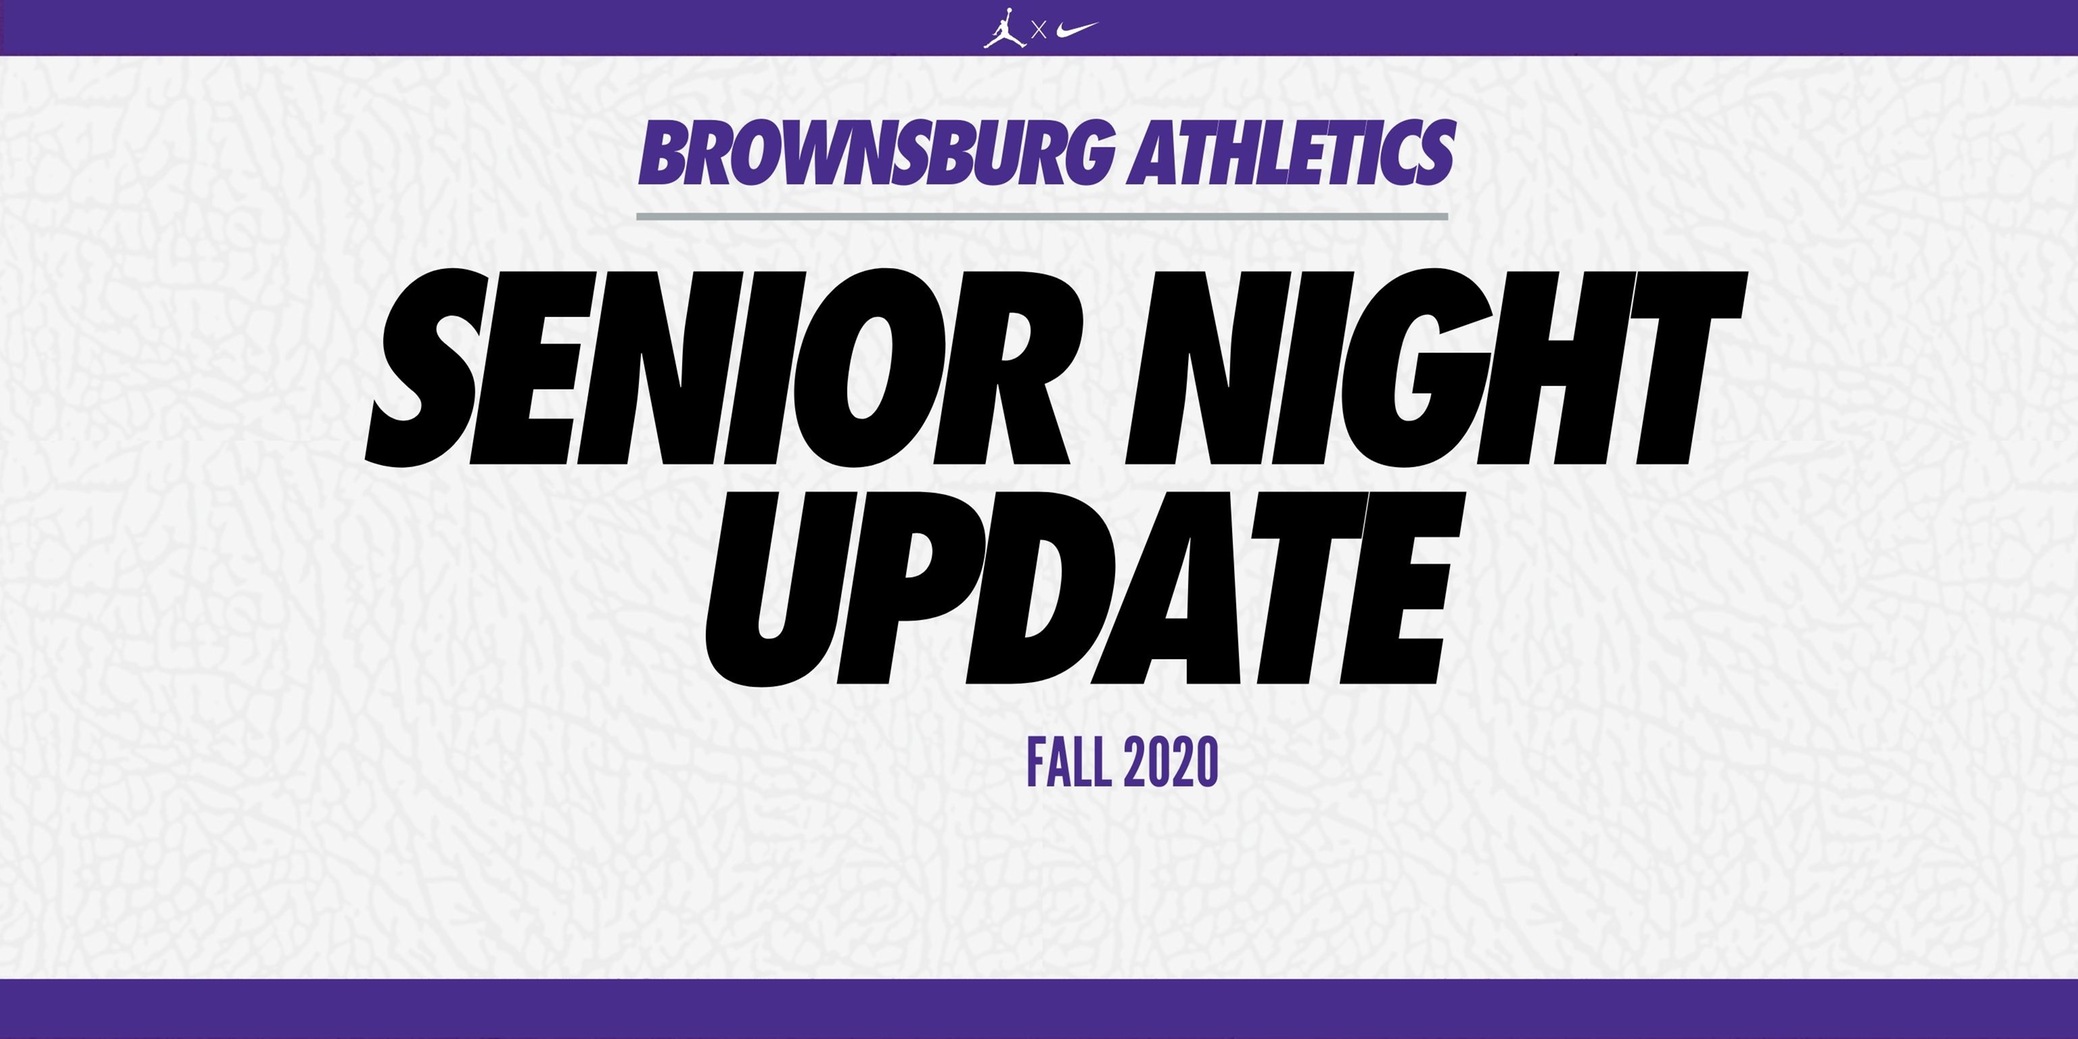 Brownsburg Athletics announces 2020 fall sports Senior Night schedule changes